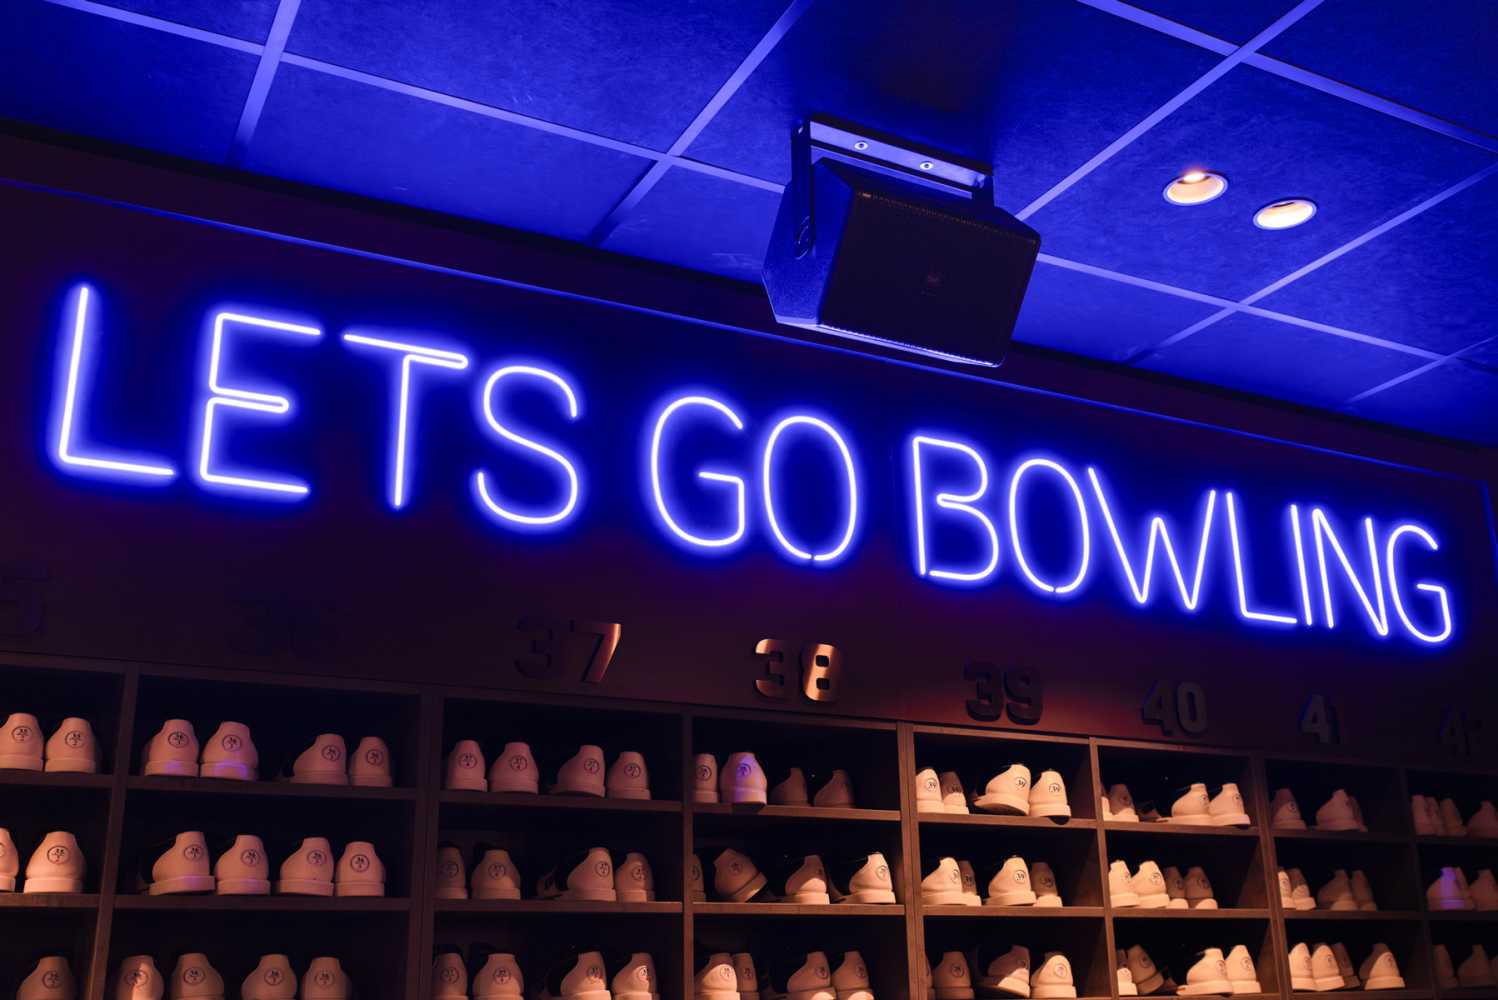 Let’s go bowling in Kerkrade